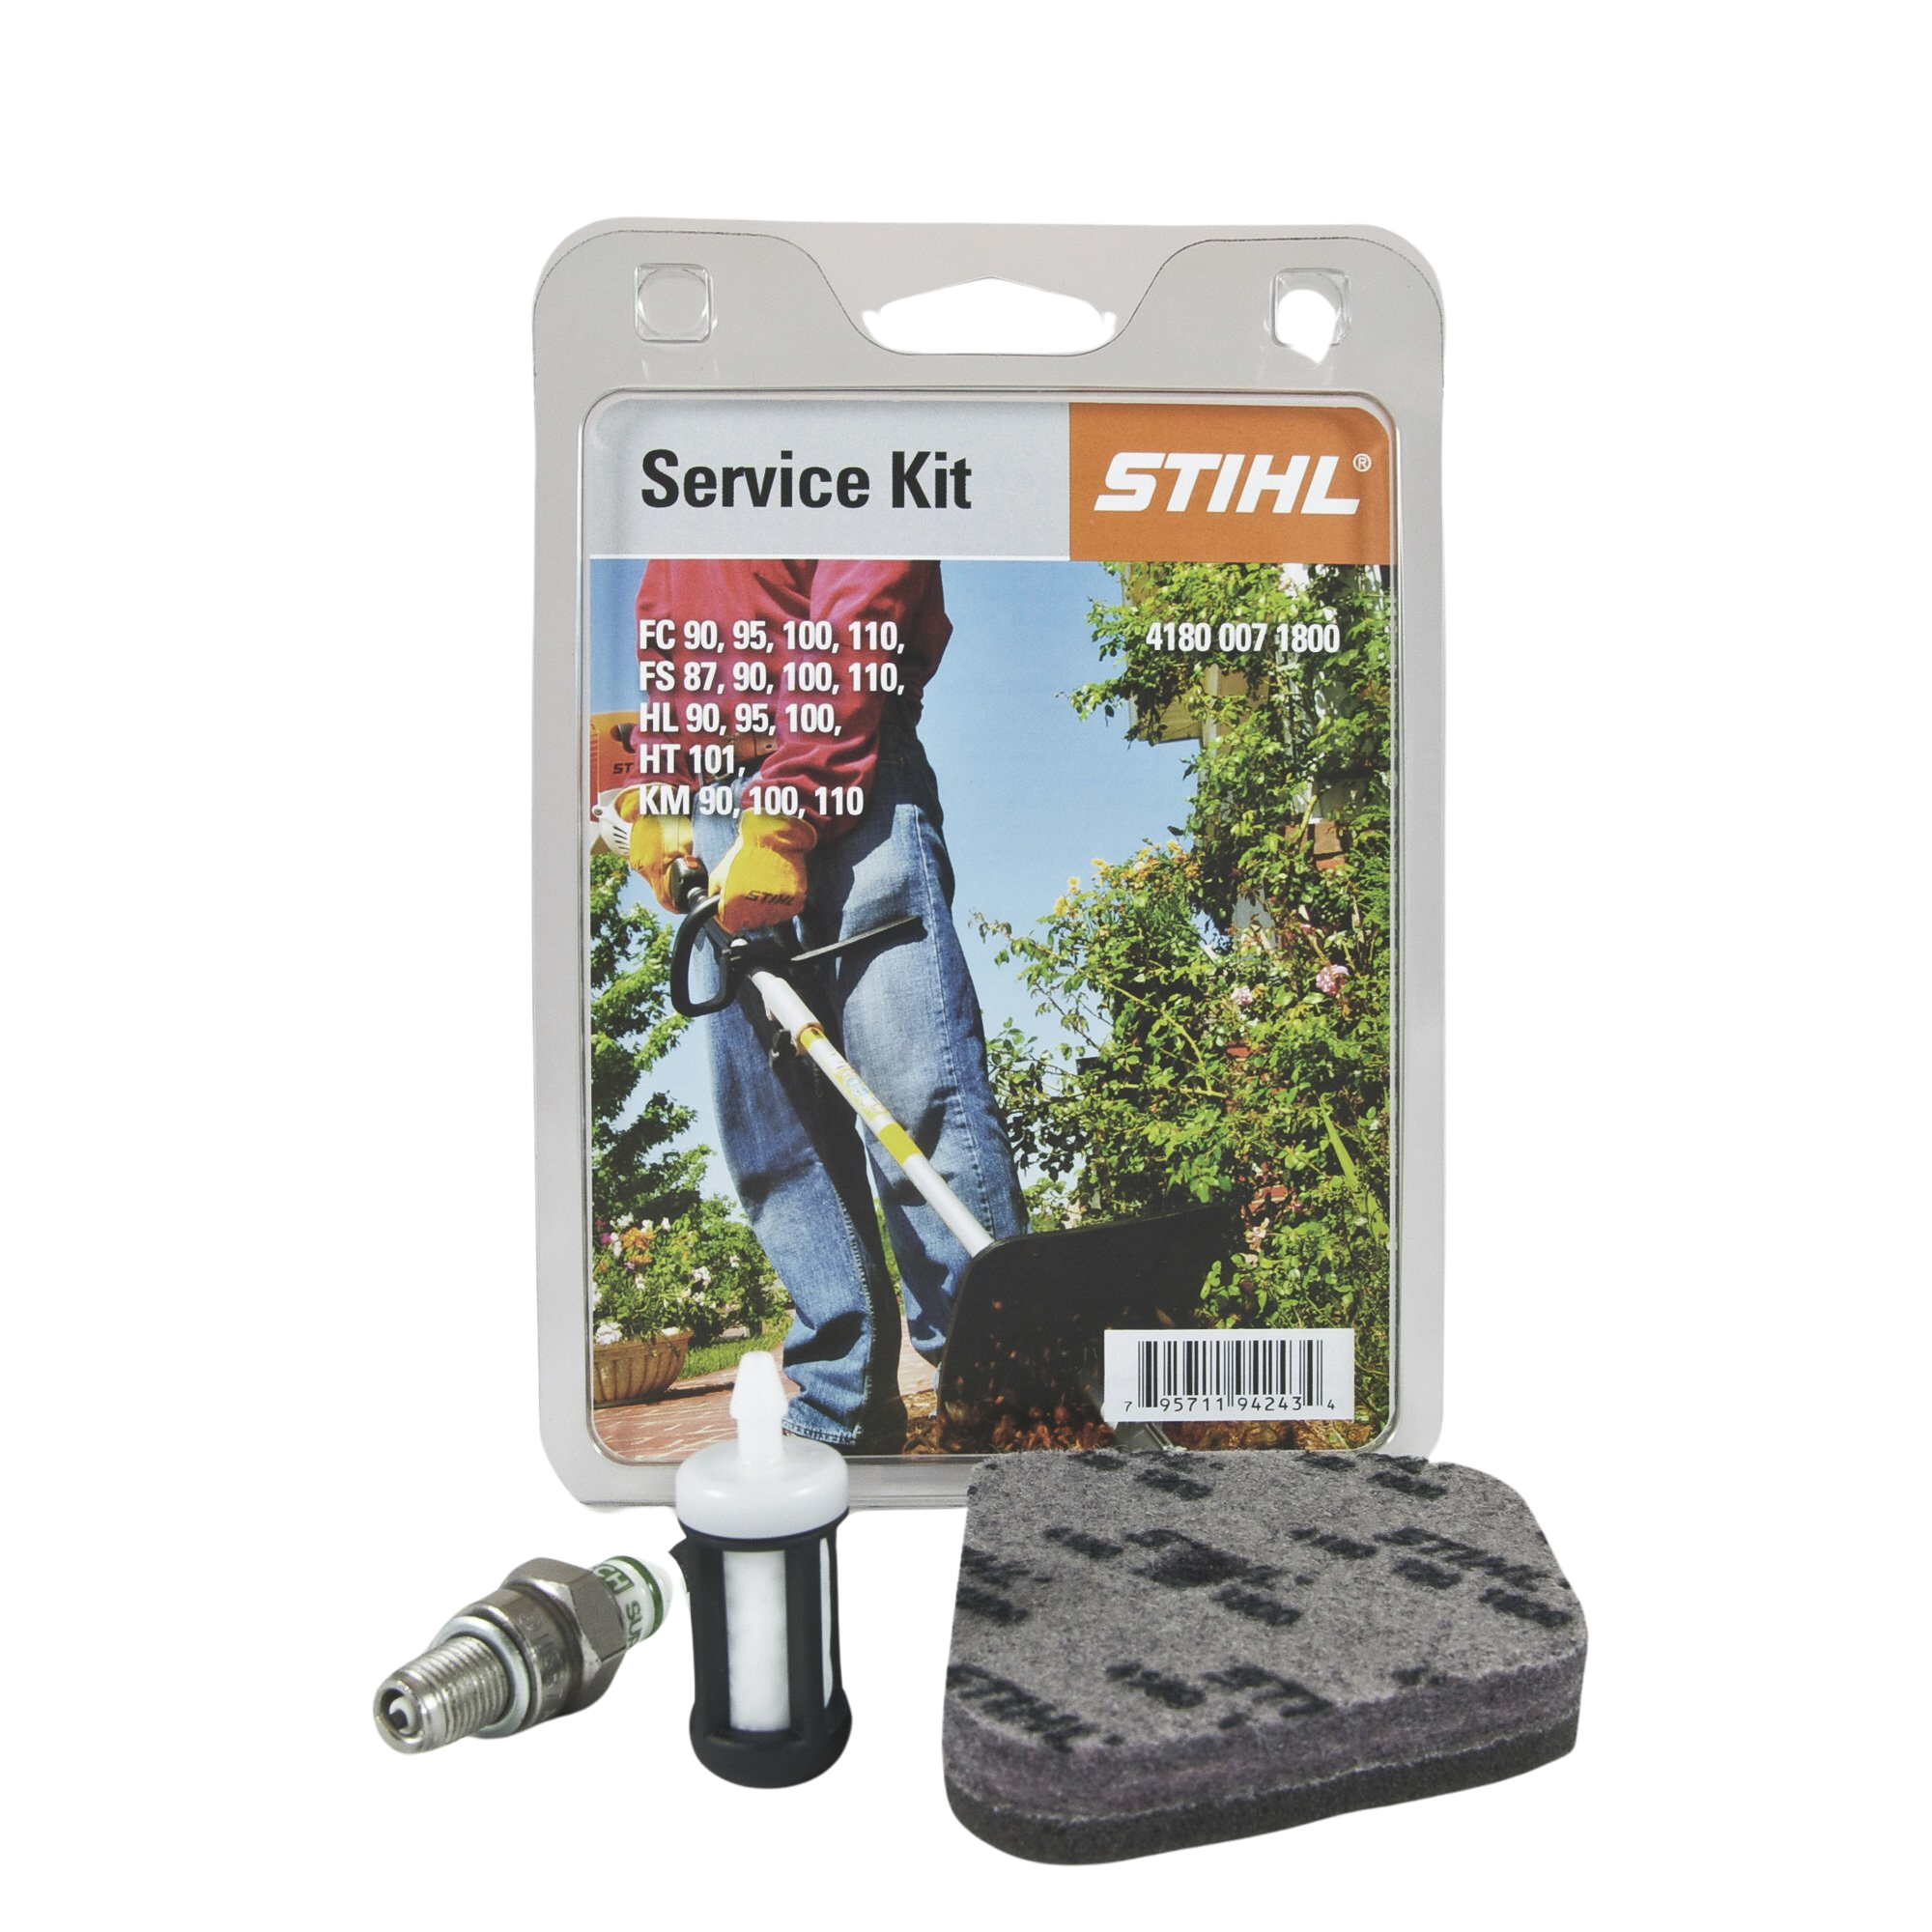 Stihl Trimmer Service Kit 4180 series | 4180 007 1042